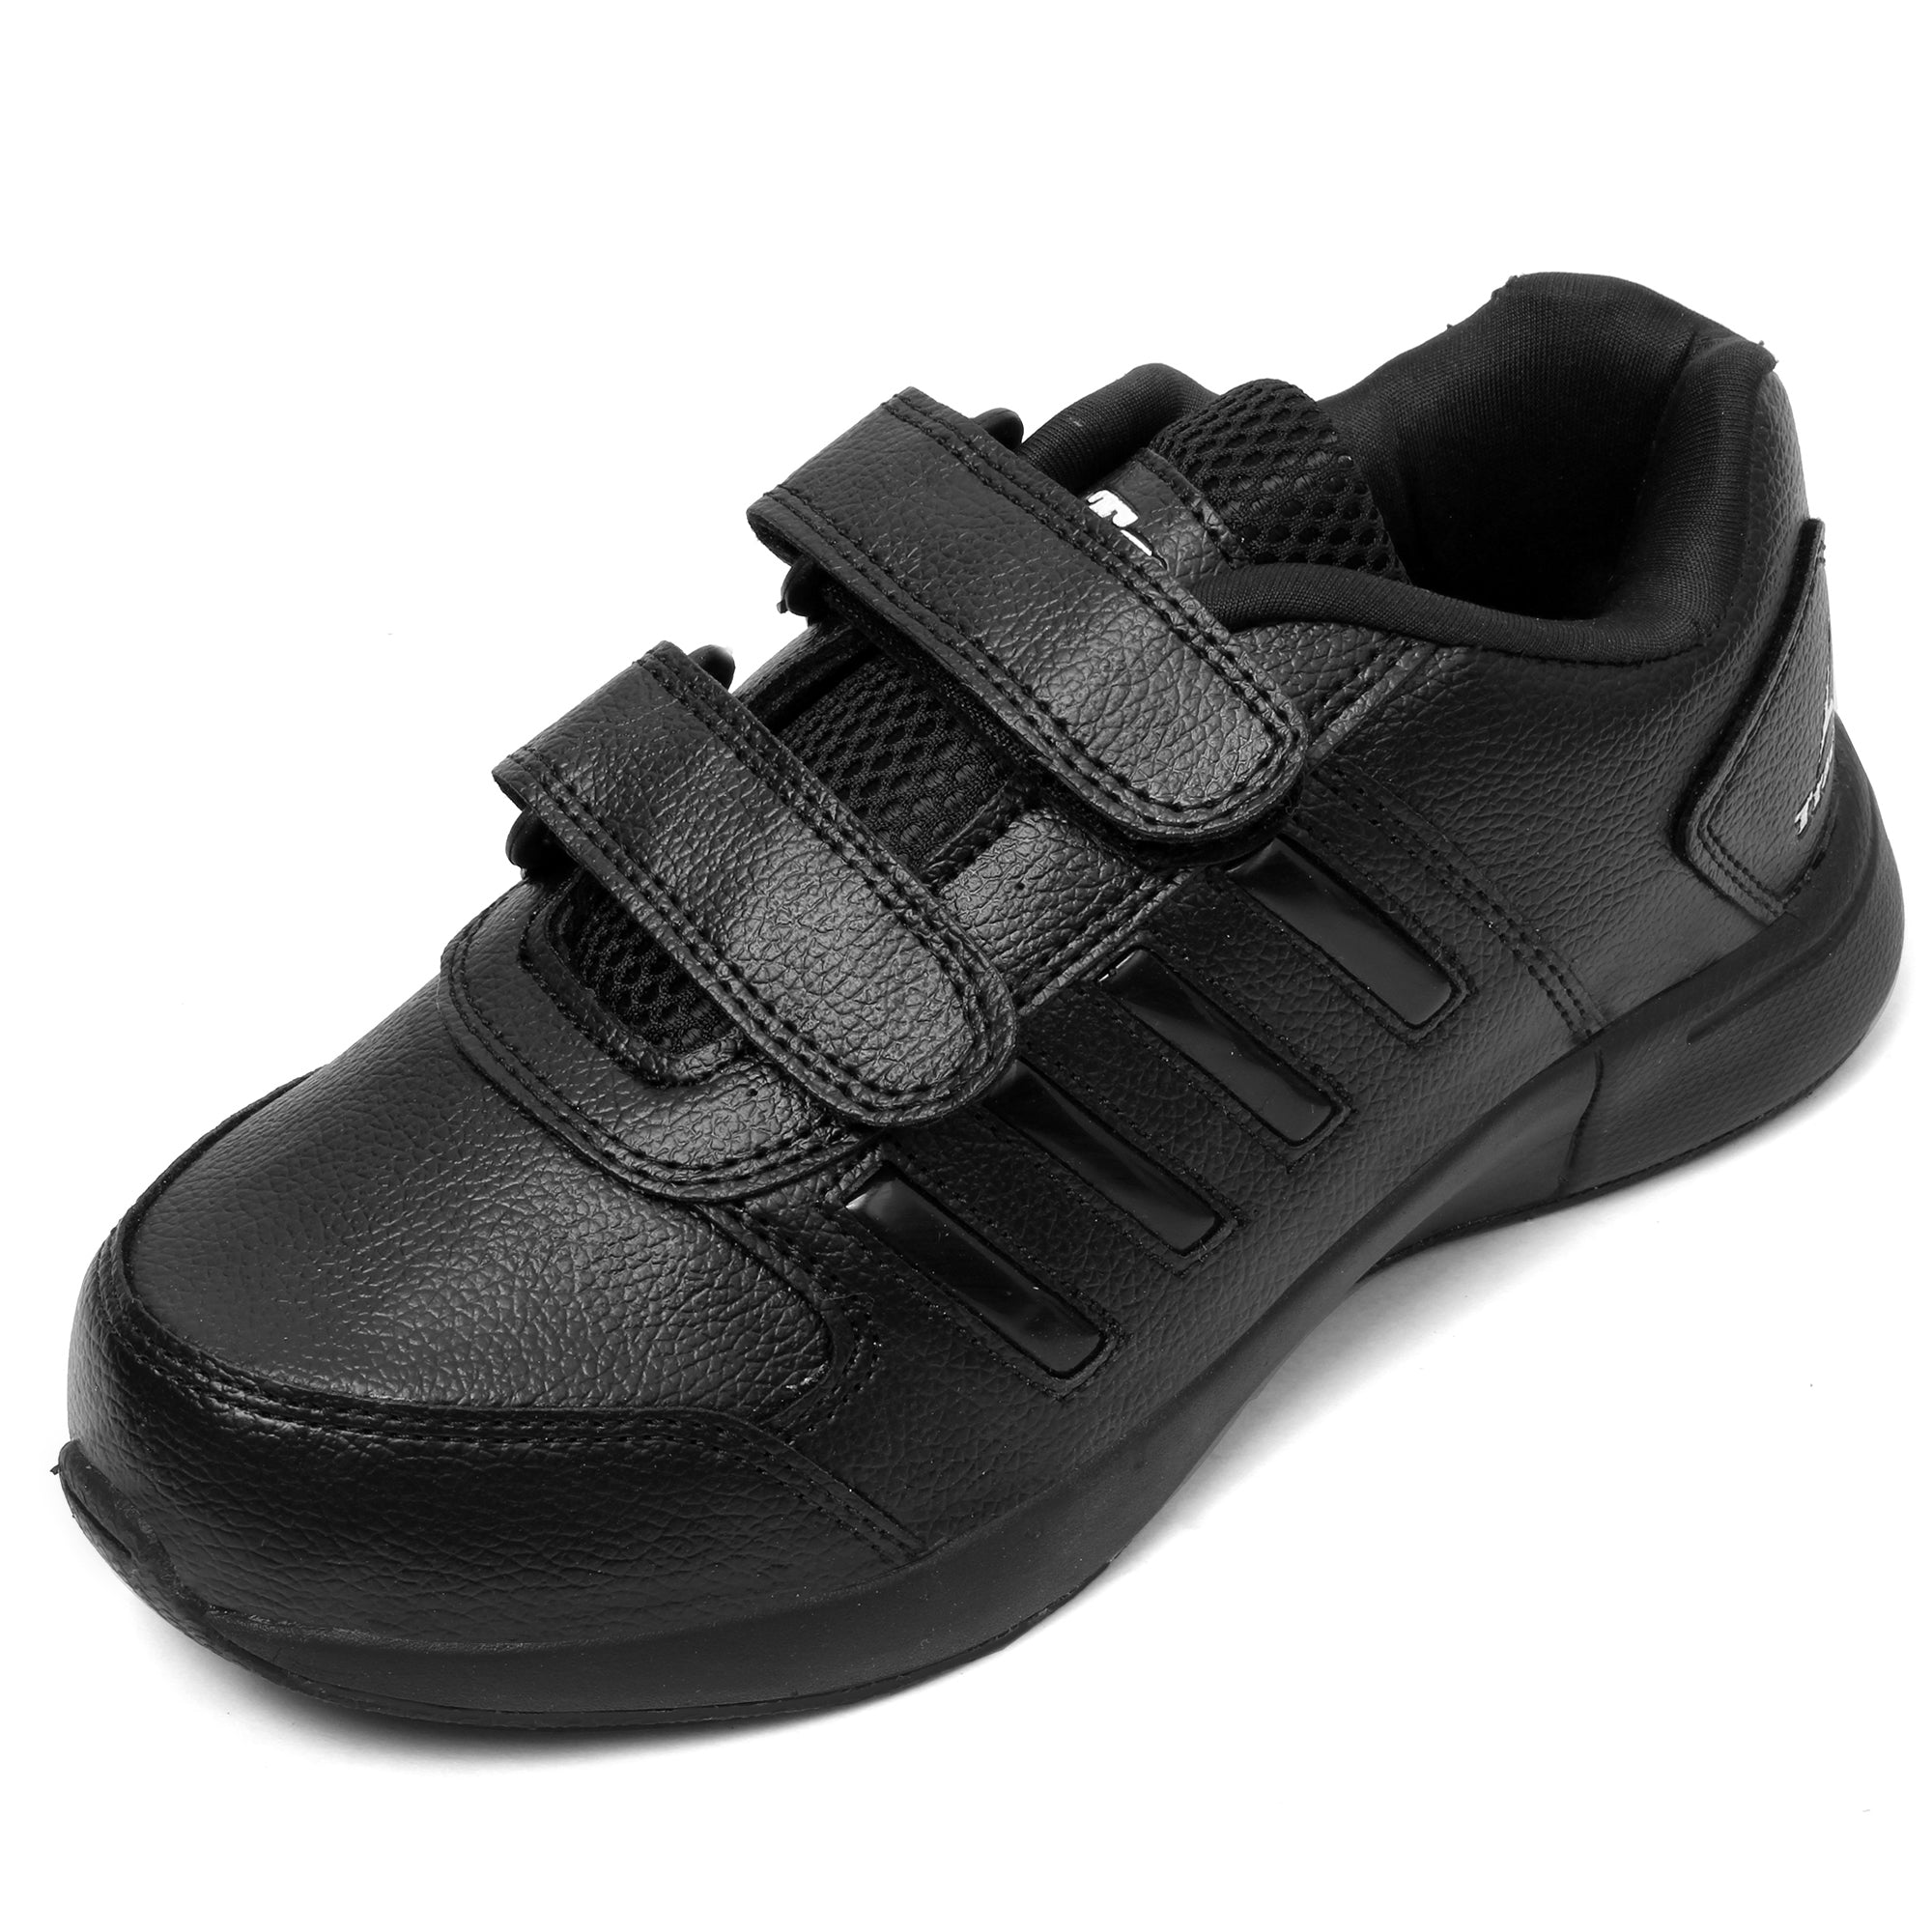 Alexander McQueen Men's Leather Griptape Sneakers Size 45 EU / 12 US Black  | eBay